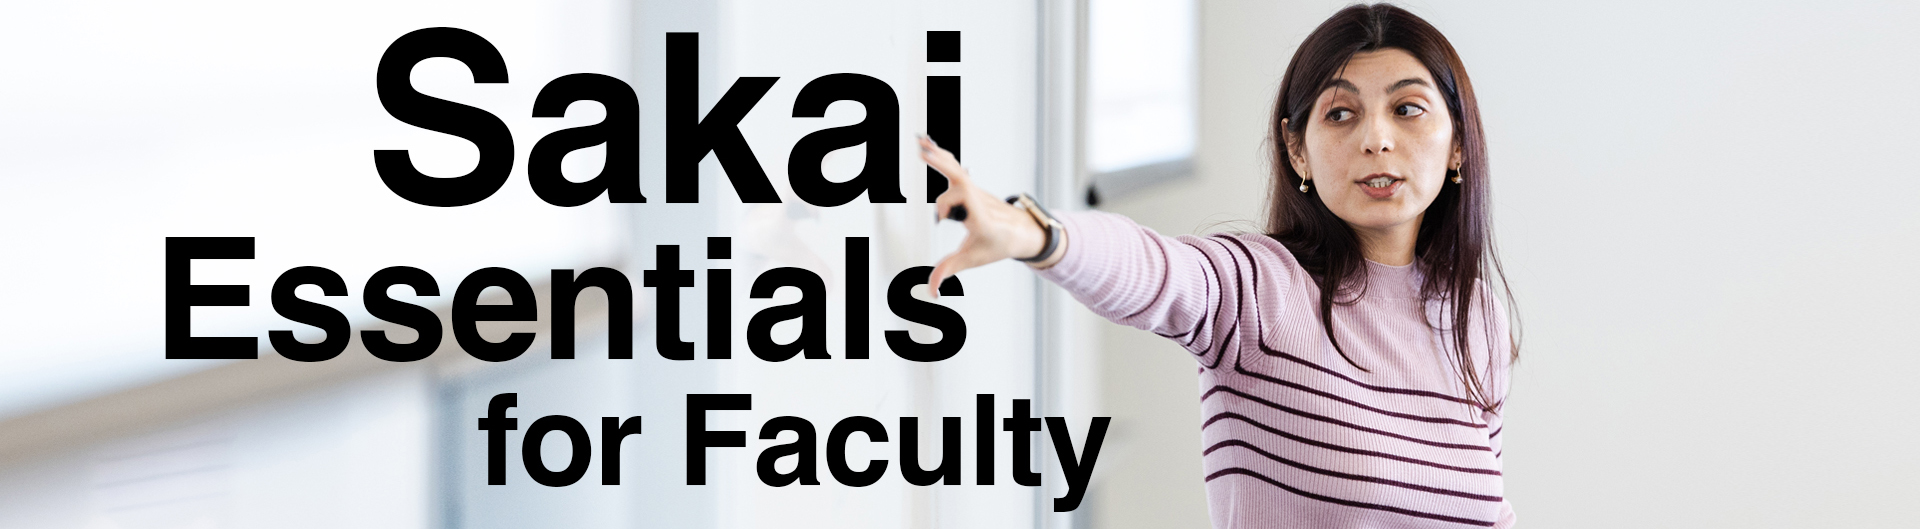 Sakai Essentials for Faculty